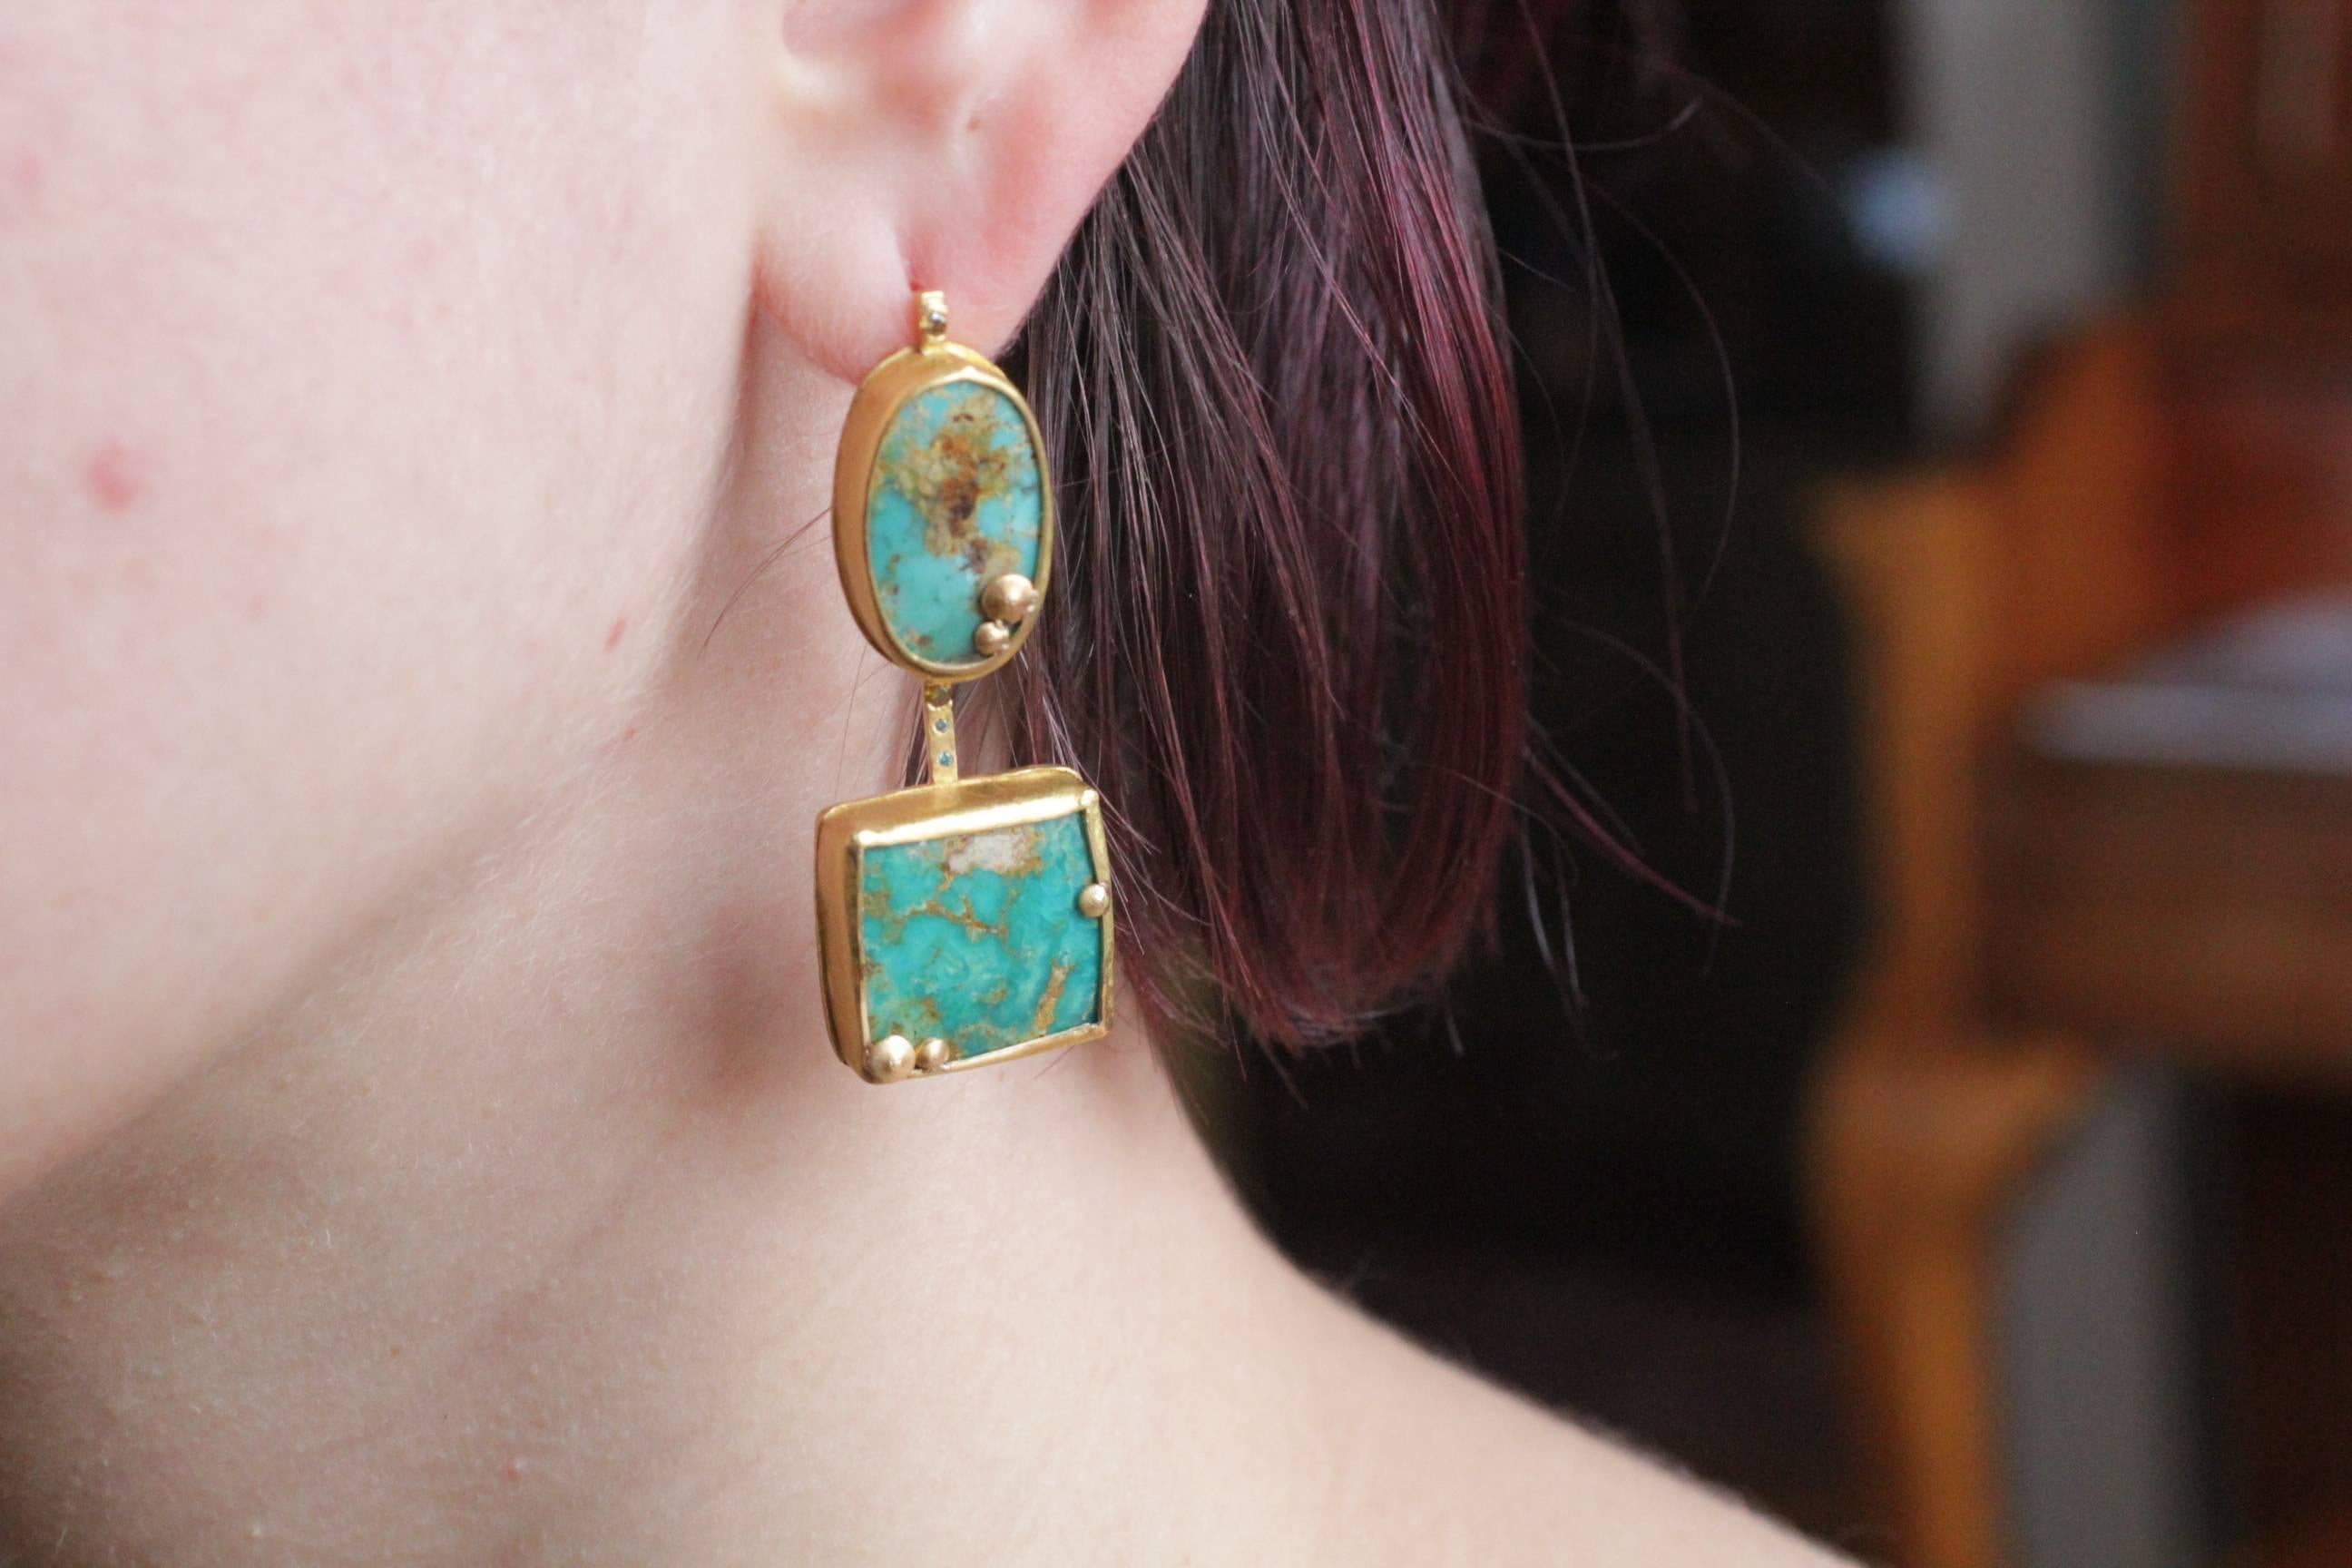 22Karat-21Karat Gold Persian Turquoise and Diamond Earrings Handmade Jewelry 9